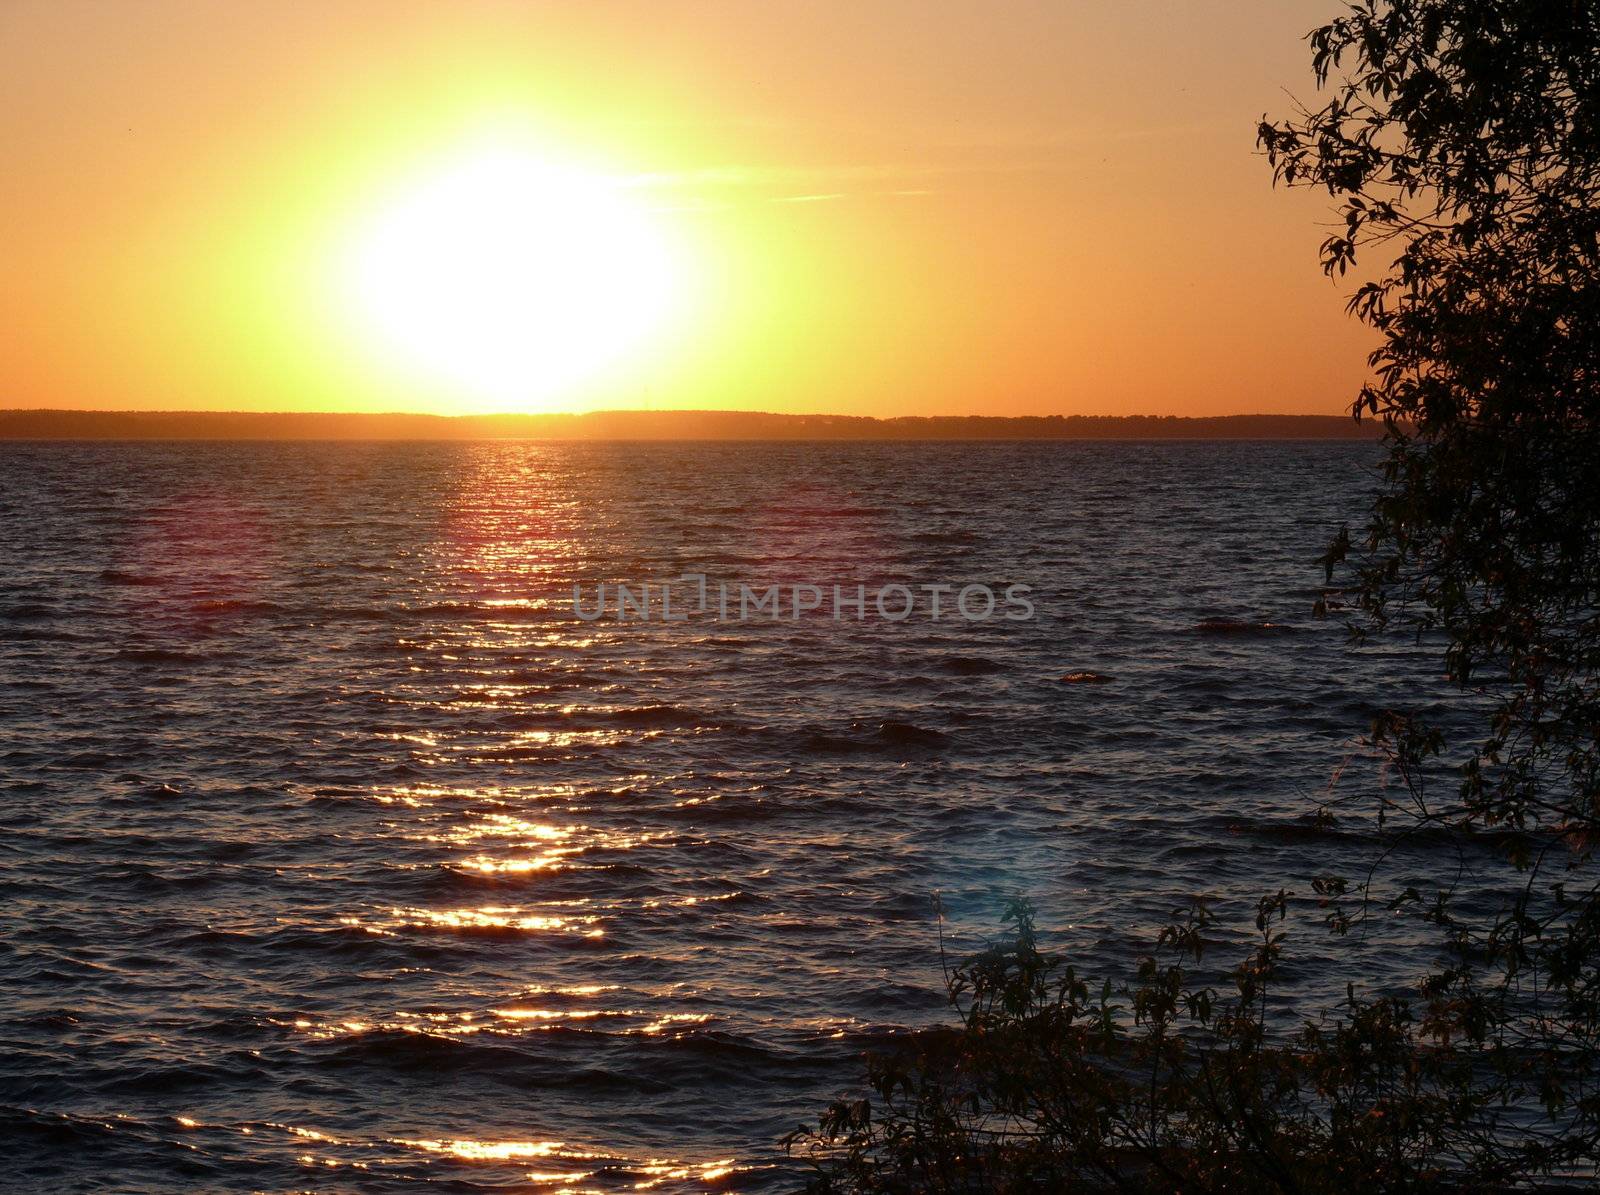 Golden romantic sunset in the lake